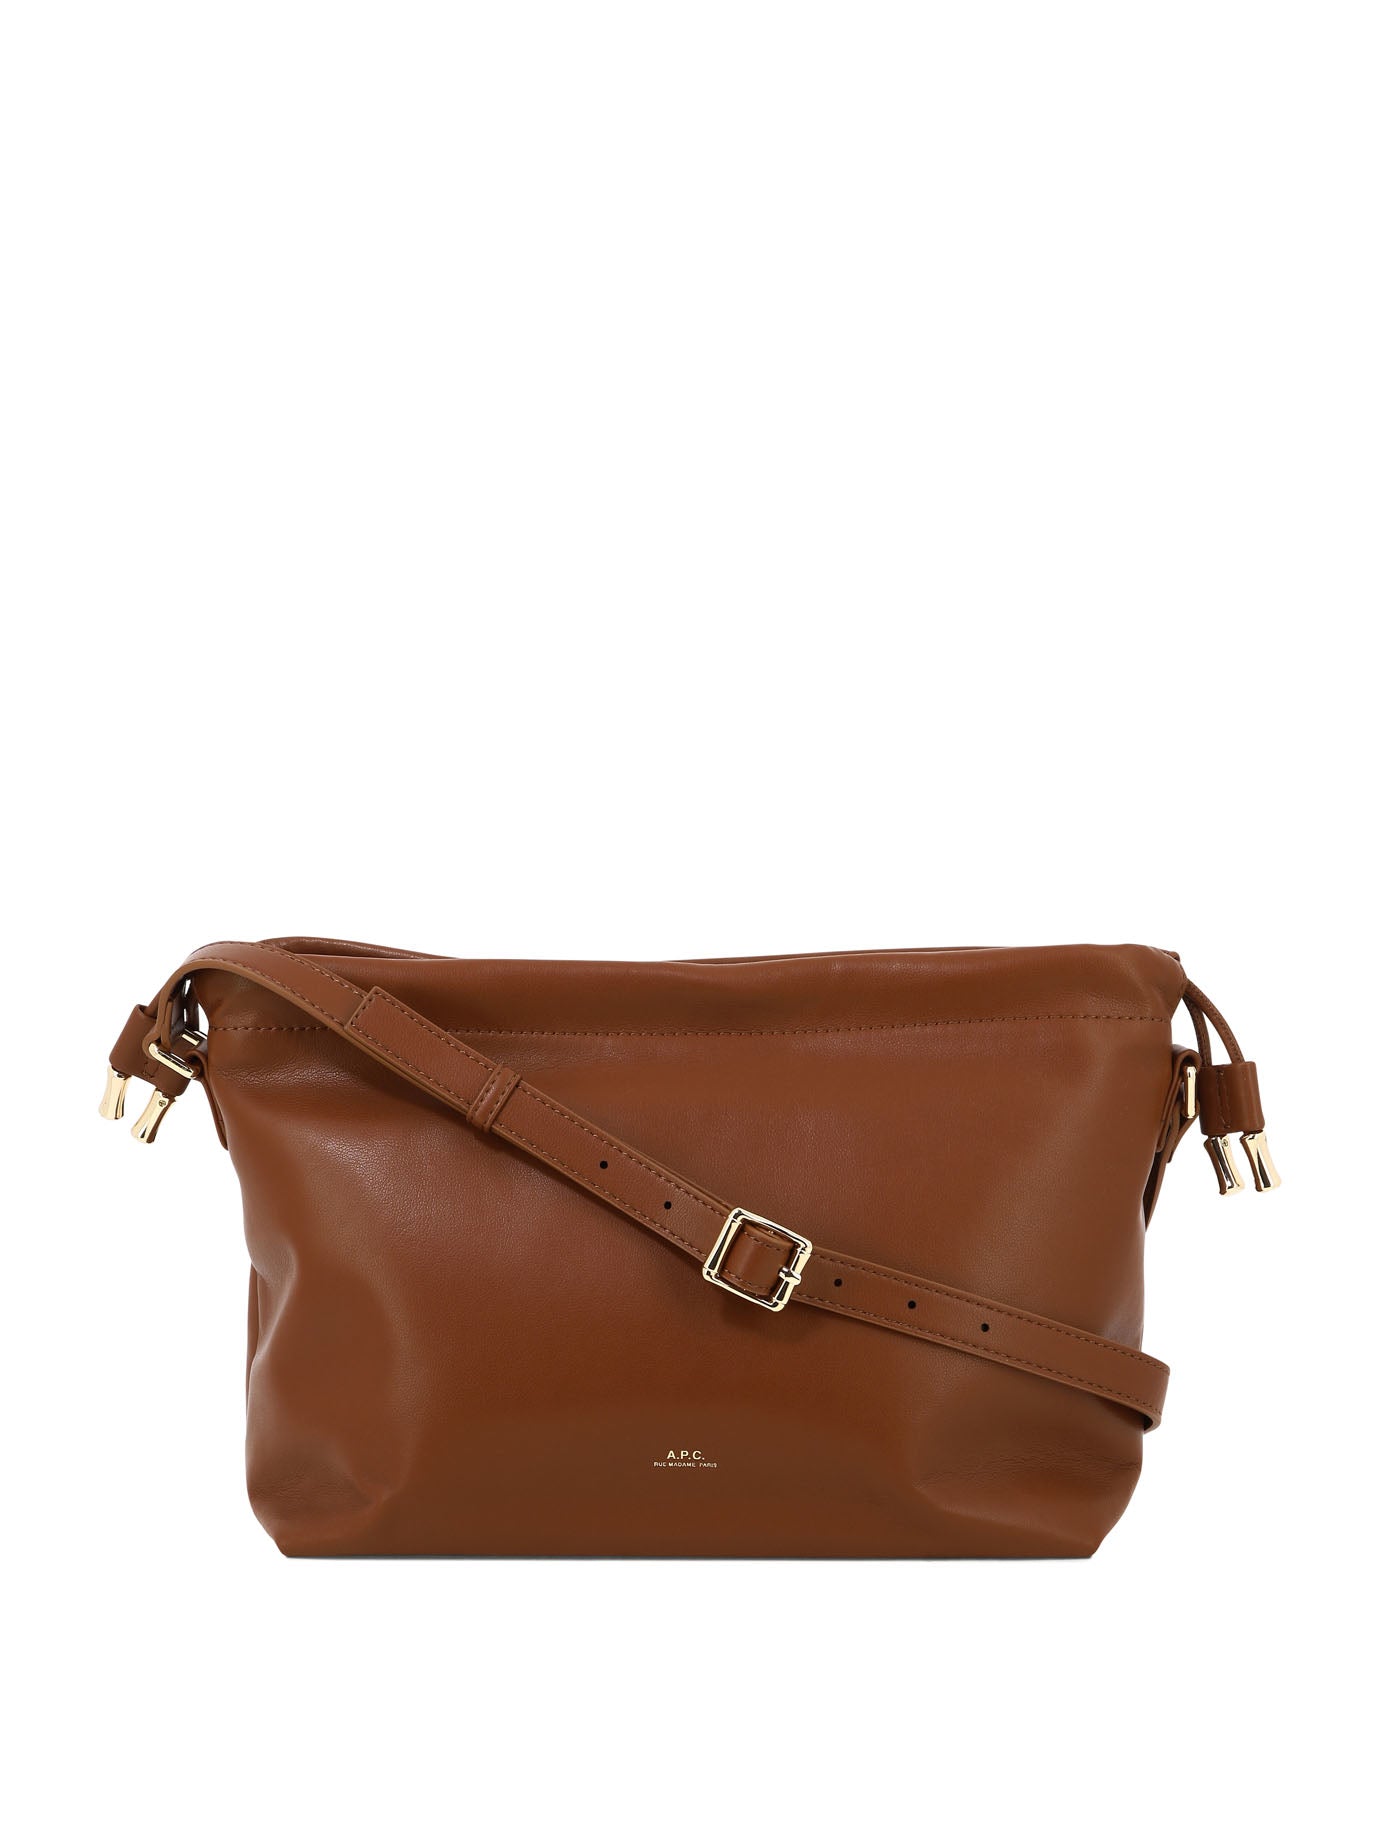 Apc Brown Shoulder Handbag For Women